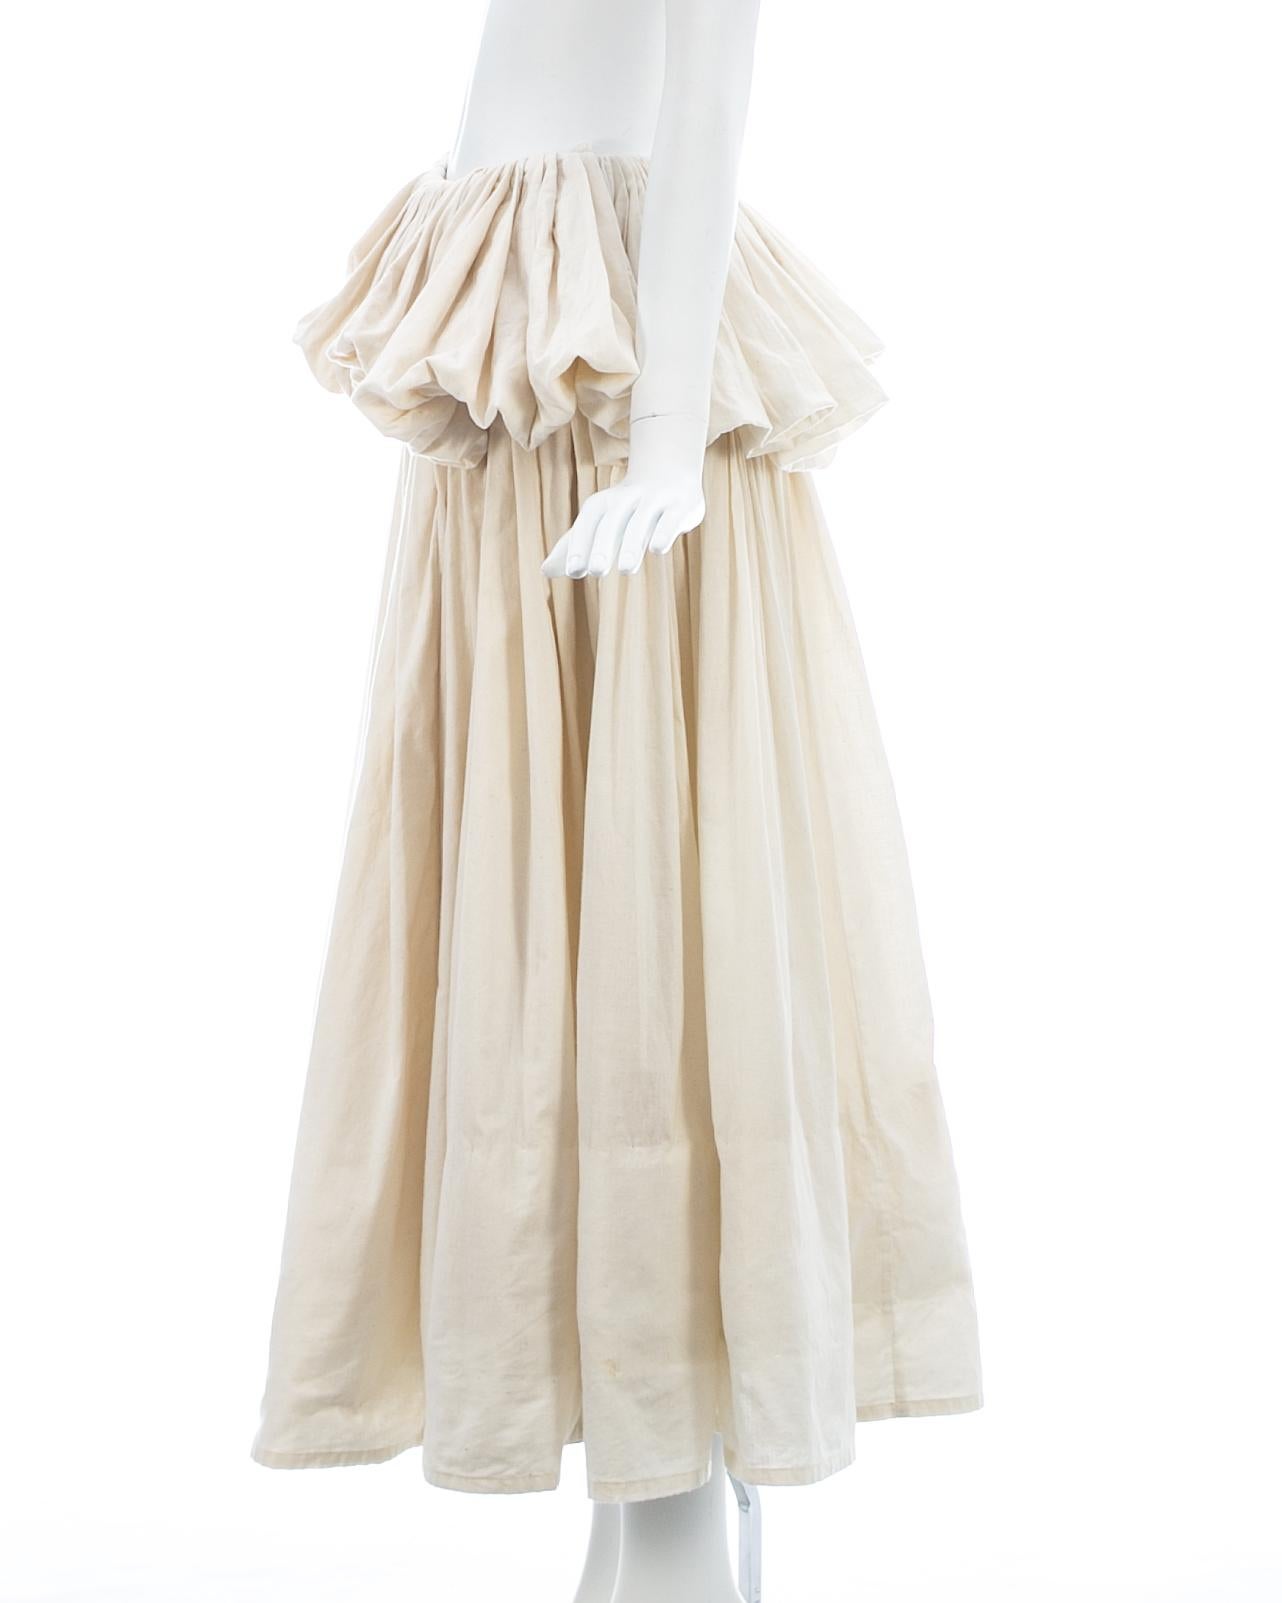 Yohji Yamamoto ivory cotton pleated mushroom skirt, ss 2000 For Sale 1